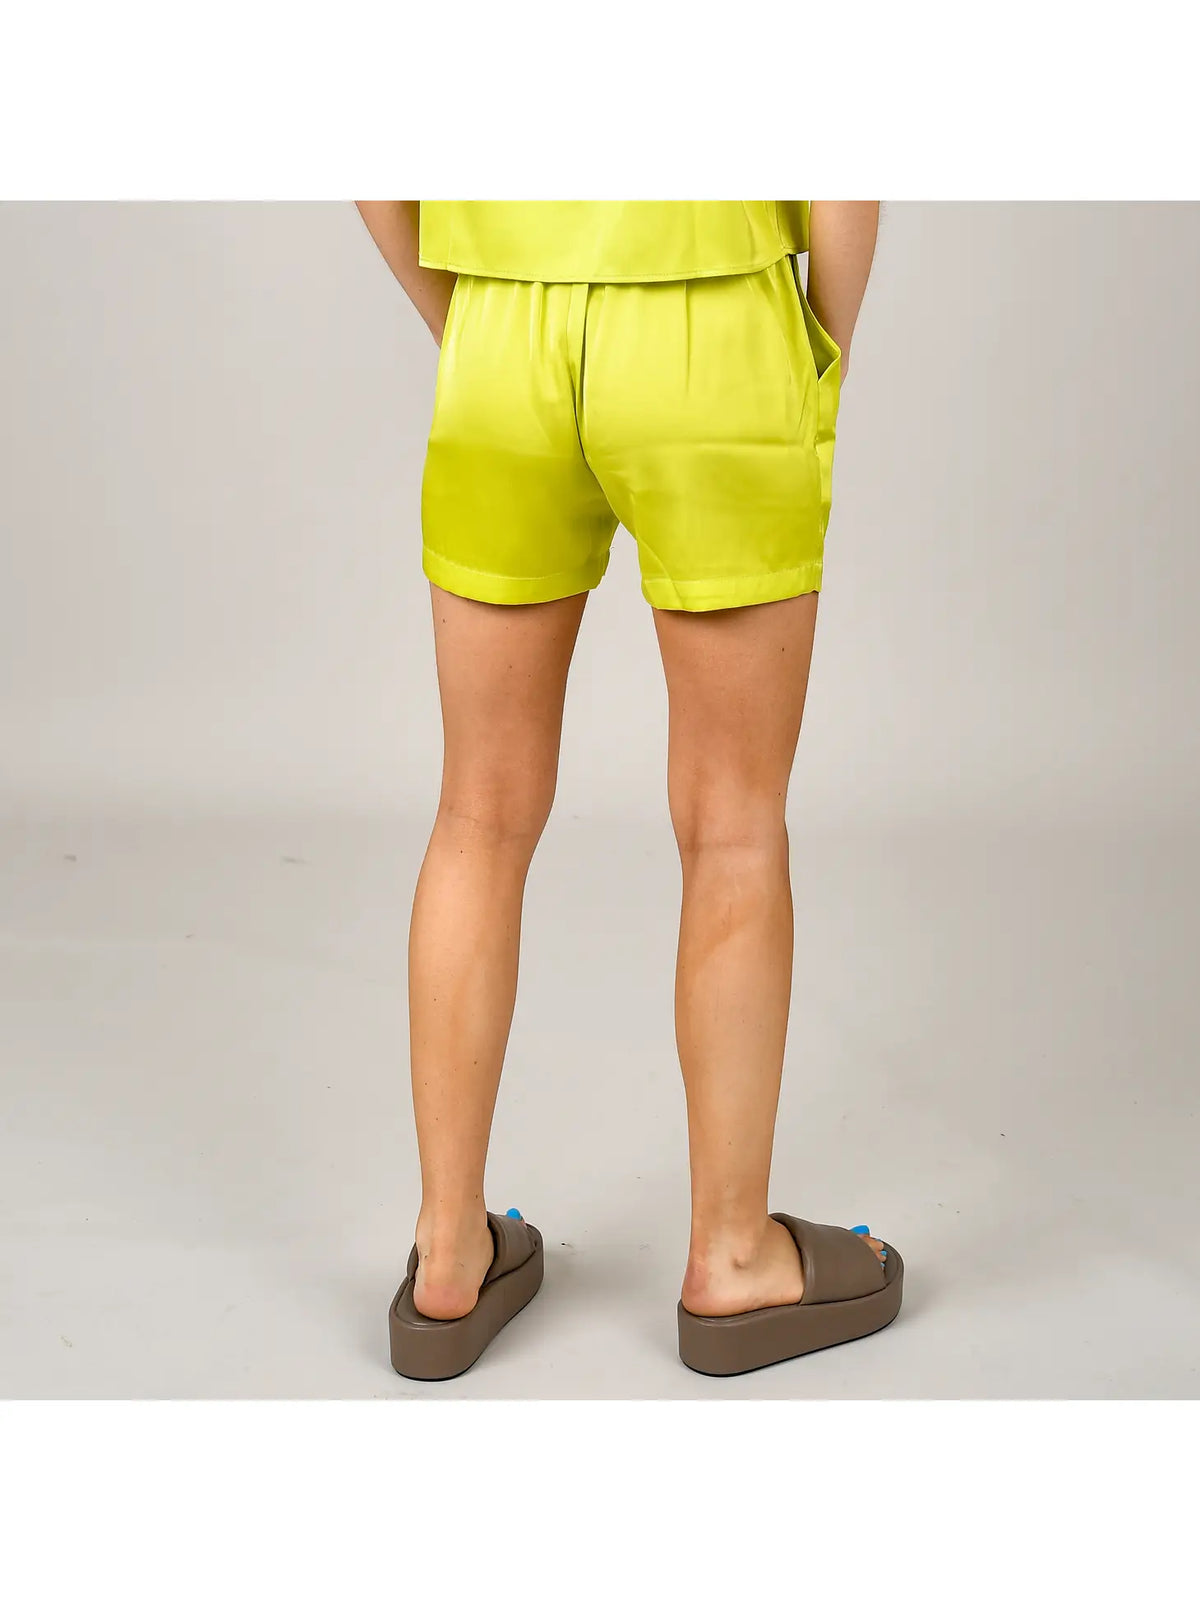 RD Style Patti Pull-On Short w/ Slant Pocket - Sunny Lime